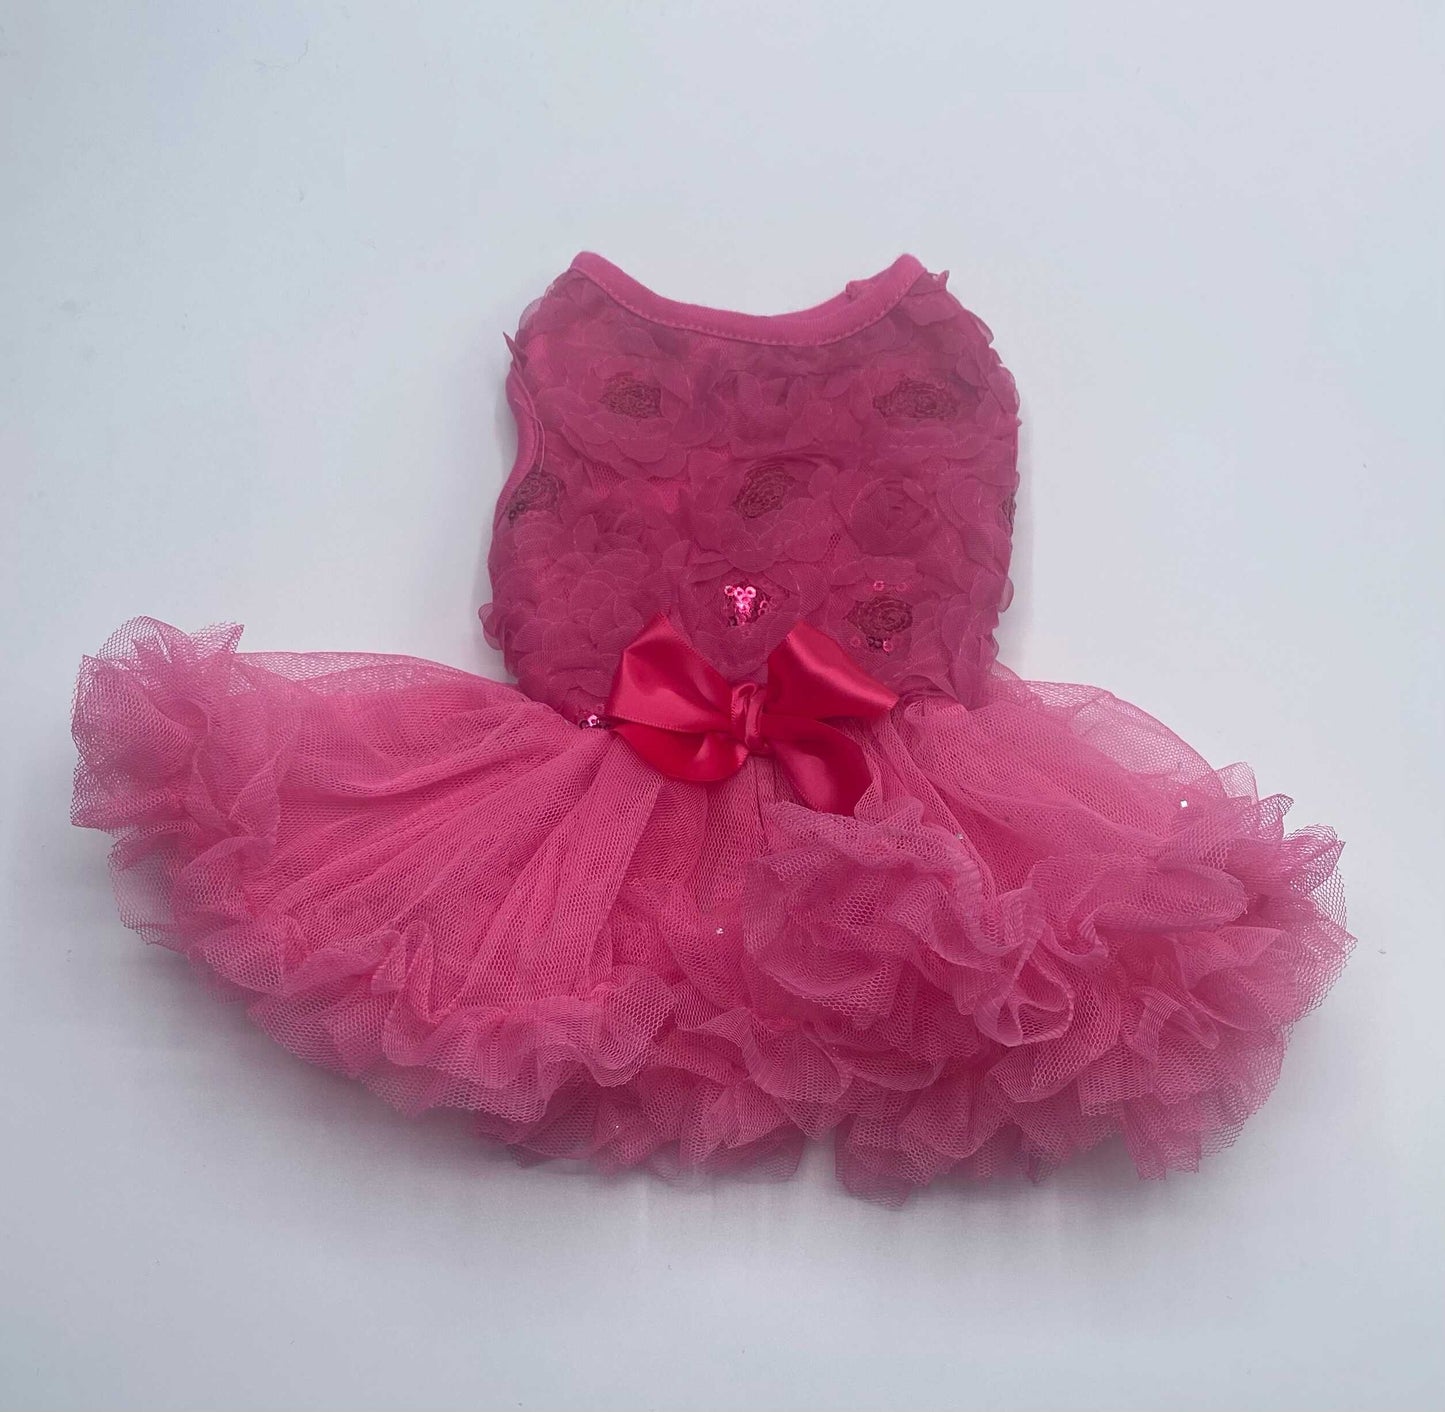 Hot Pink Flower Petti Dog Dress.